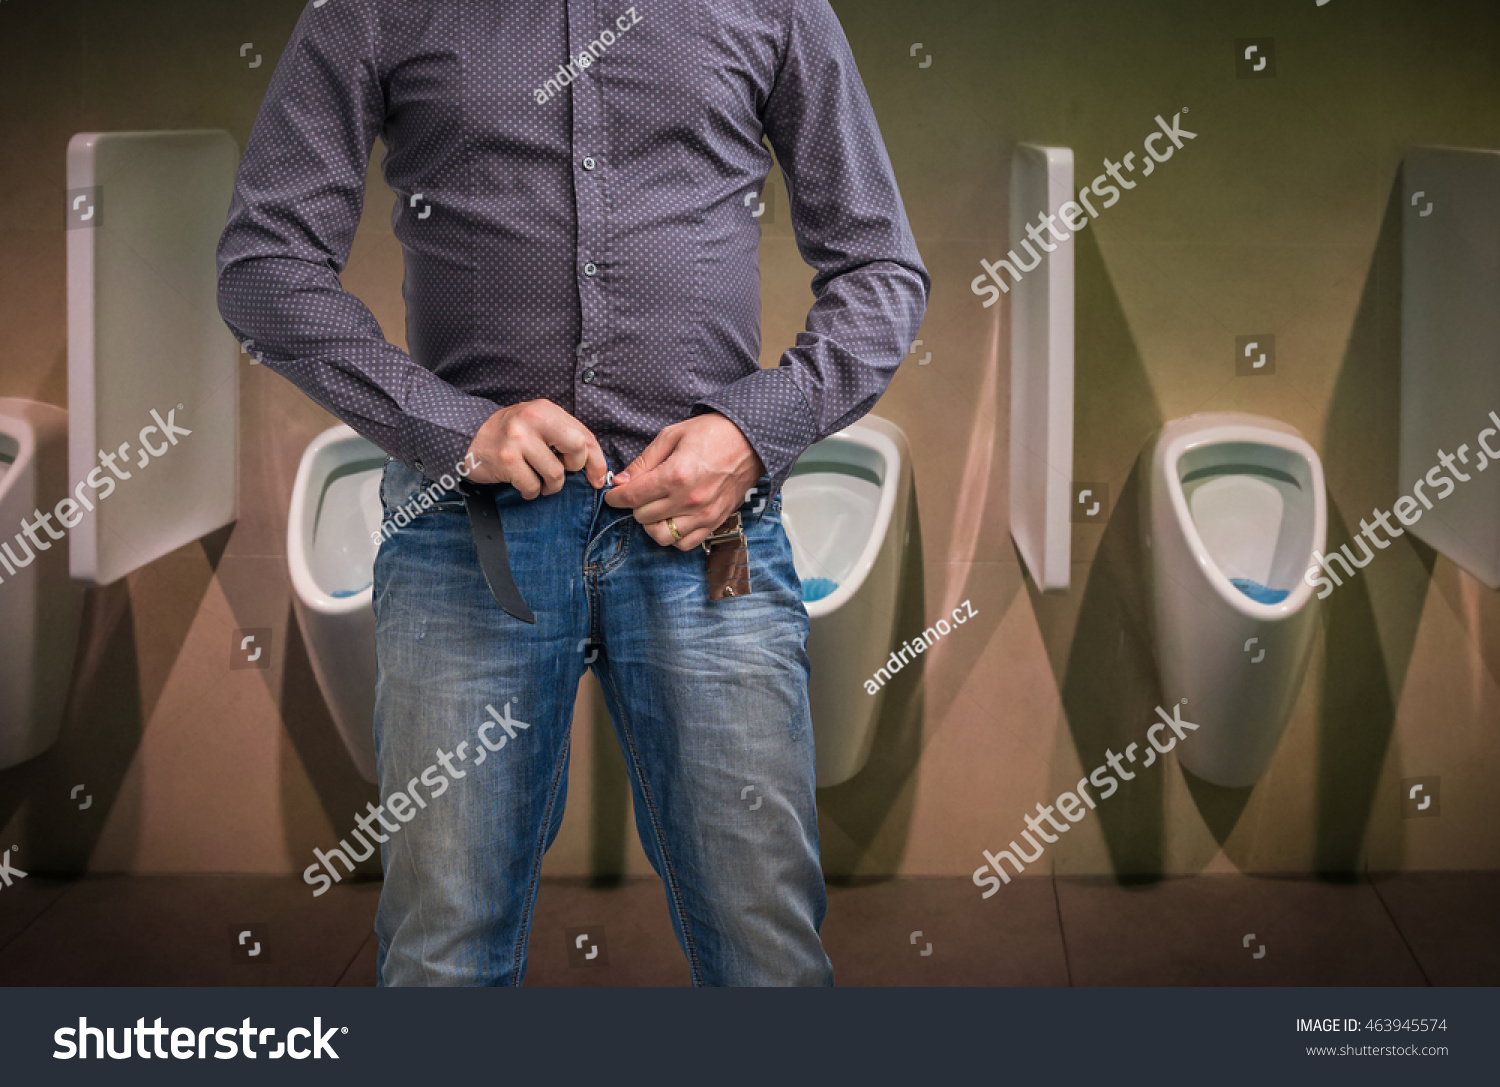 Cumming his pants